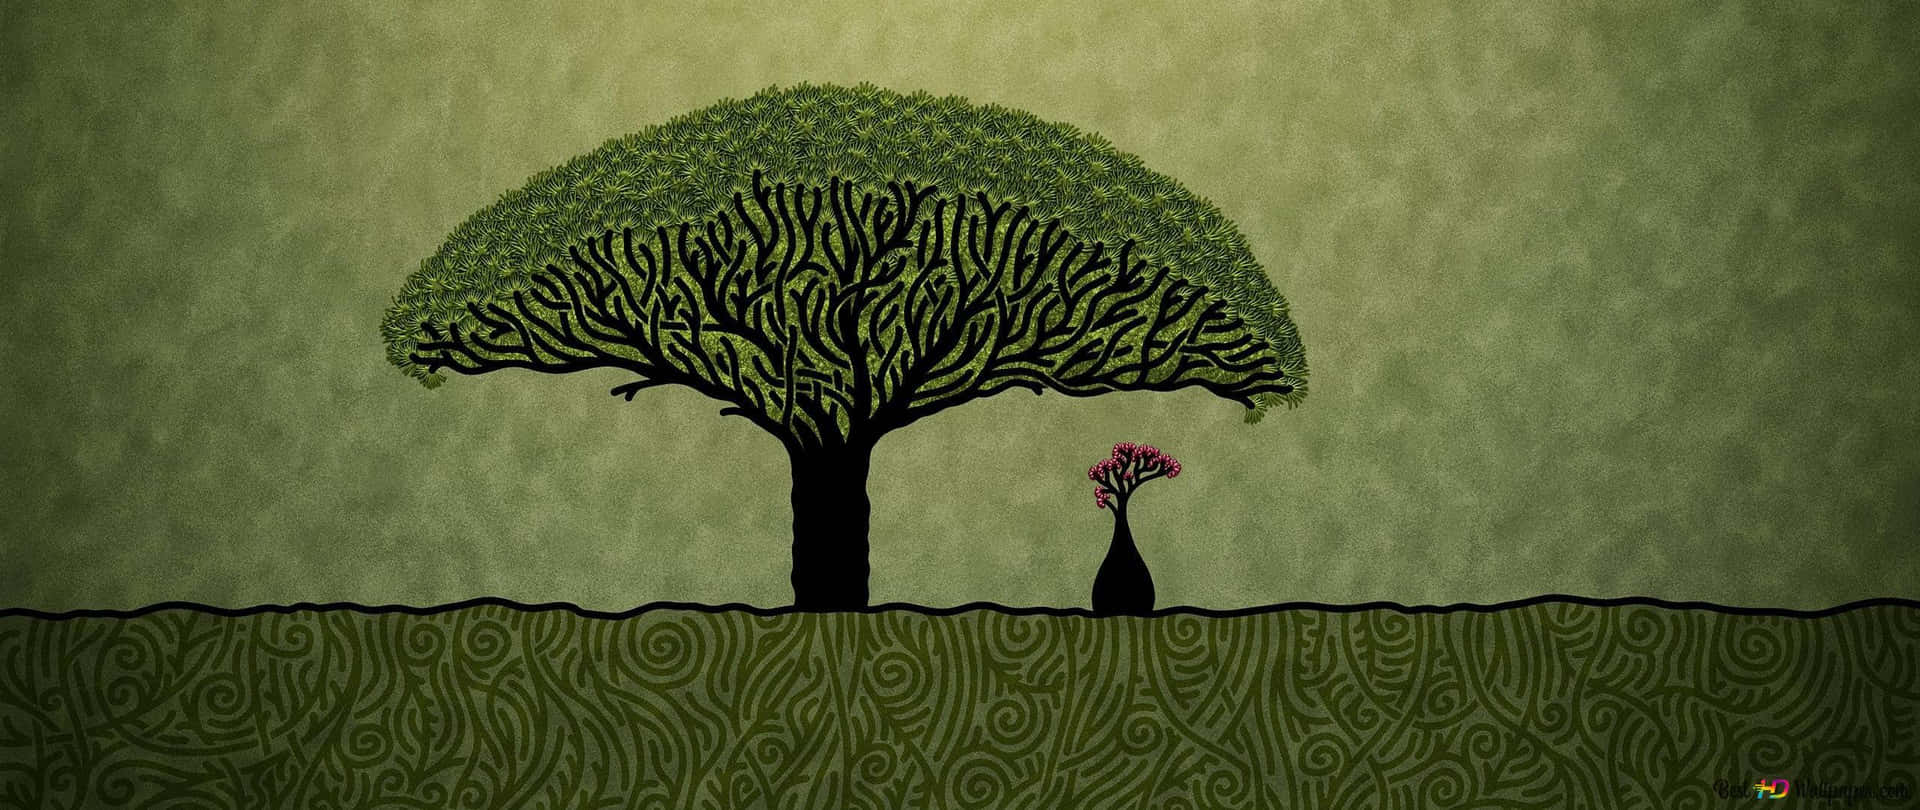 Tree of Life Wallpaper Wisteria by Dyewind on DeviantArt